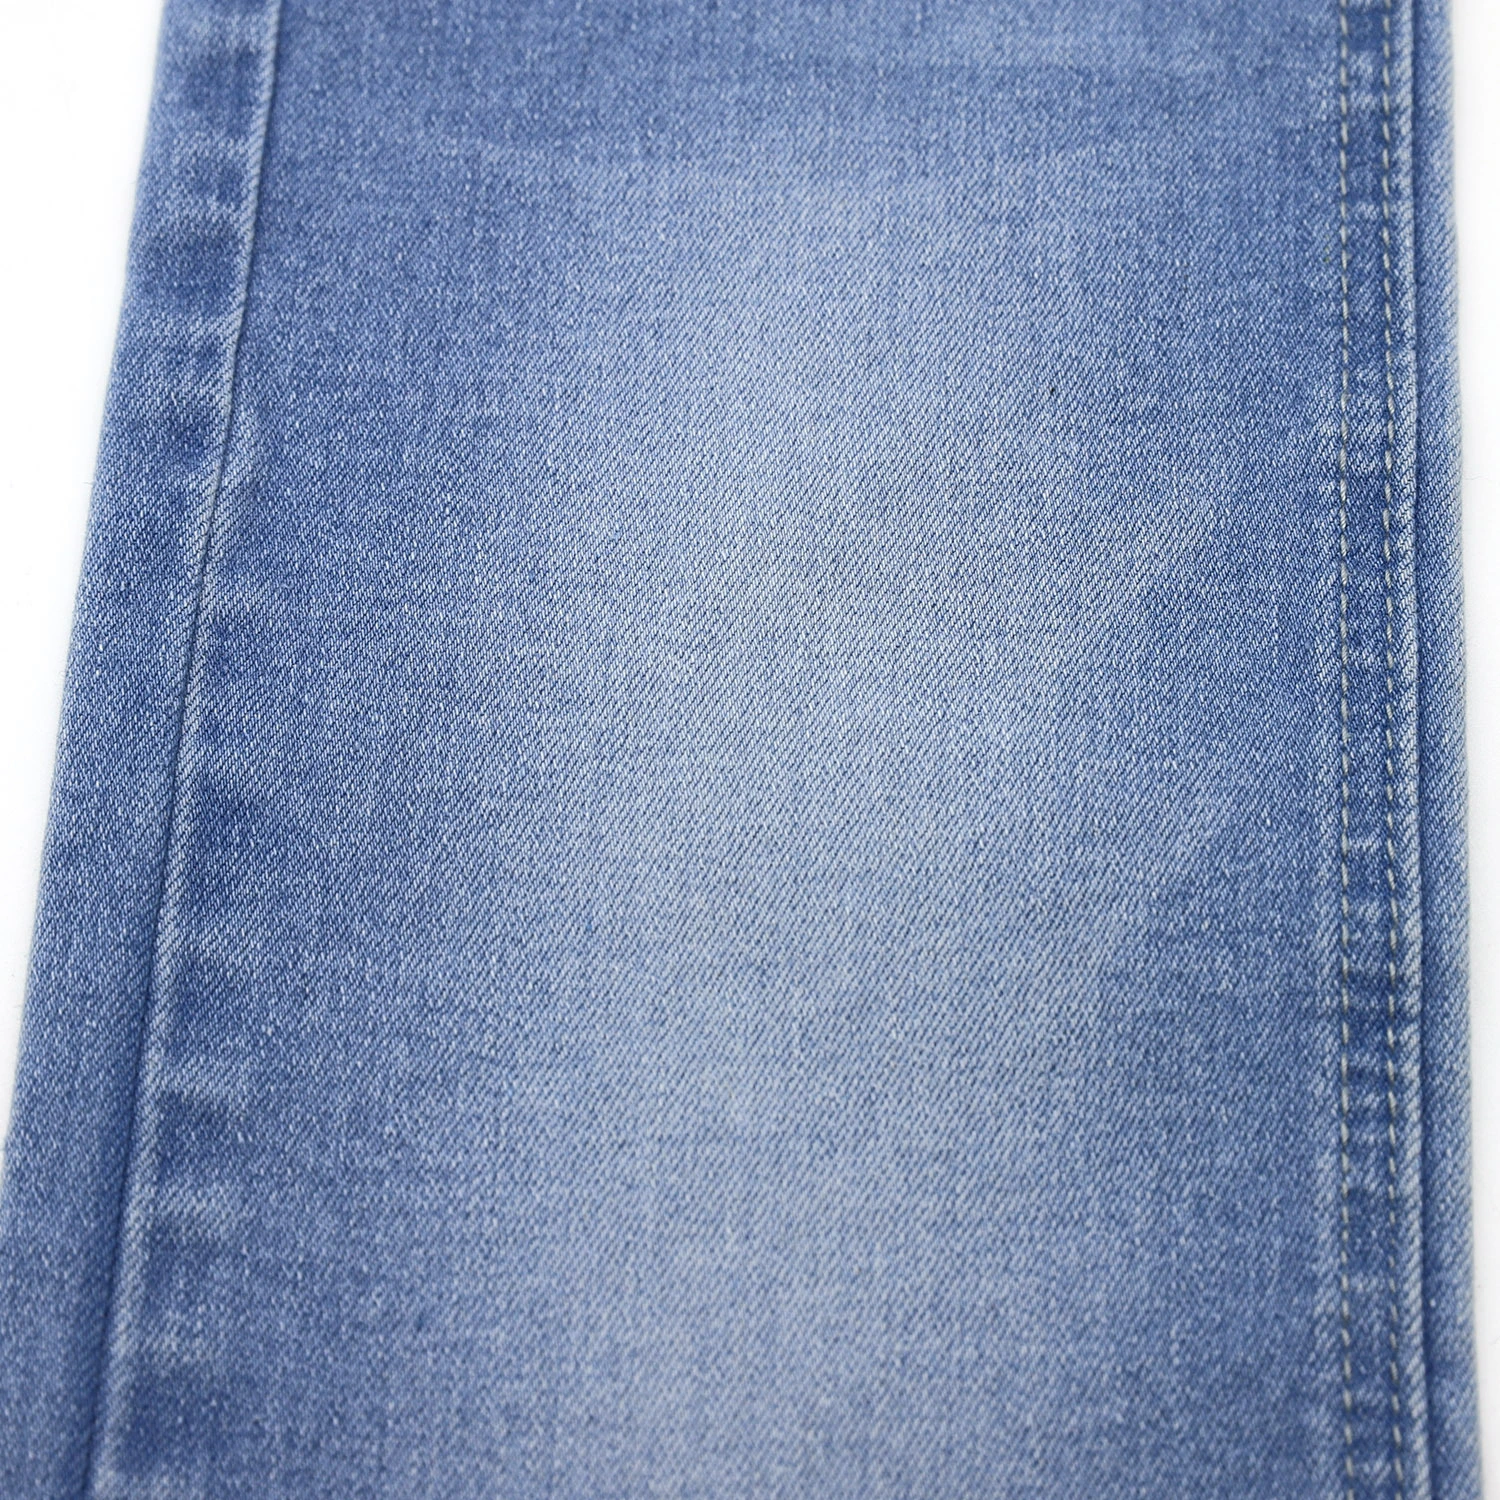 205A-7 10*16/70 65.5%Cotton 10oz High Quality Warp Slub Denim Fabric Wholesale 8